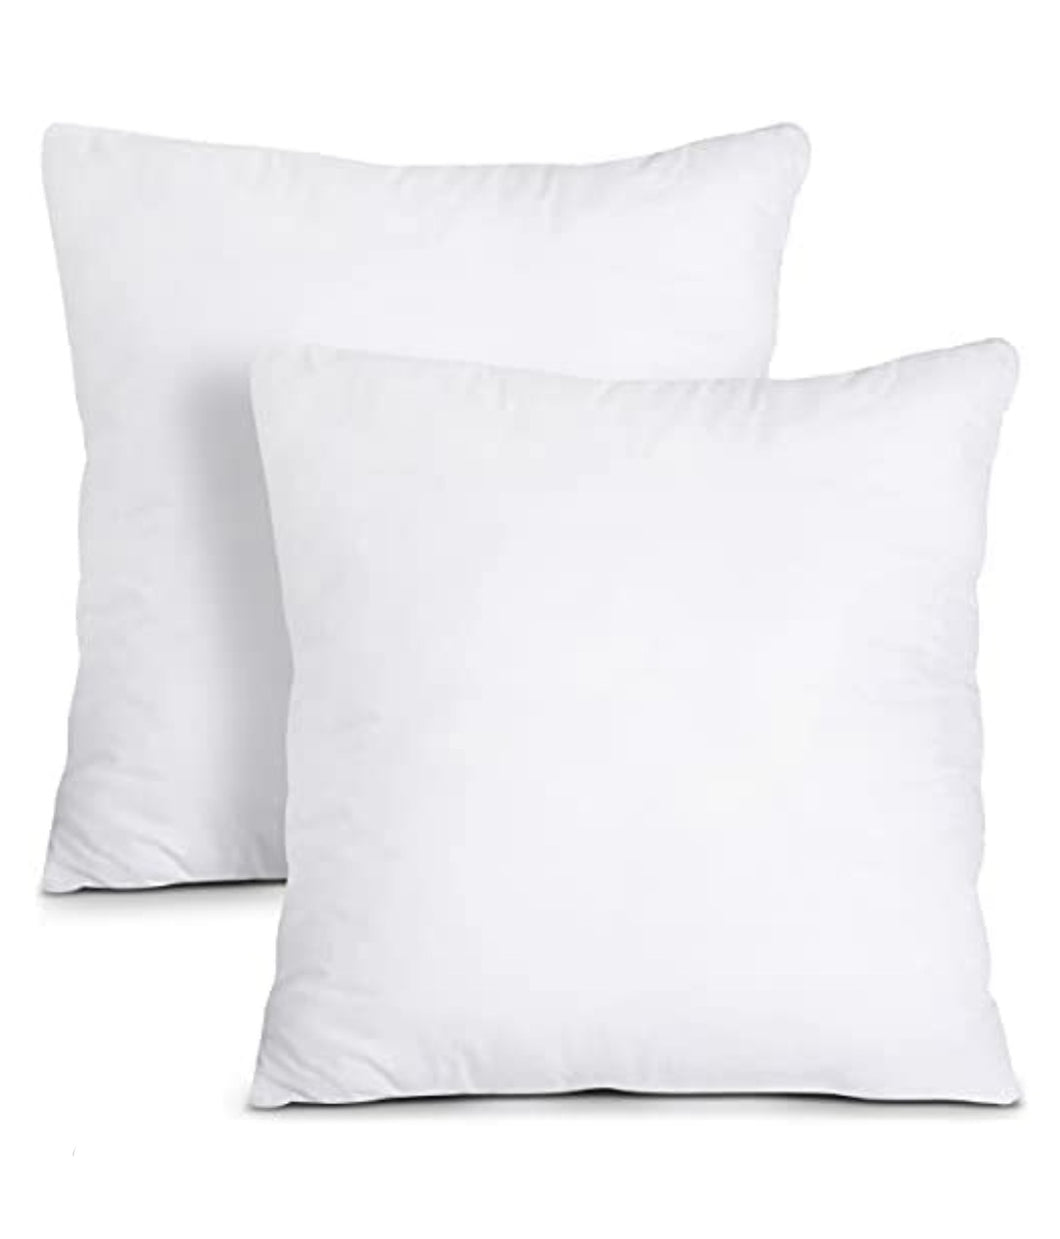 Pillow Insert (All Sizes)